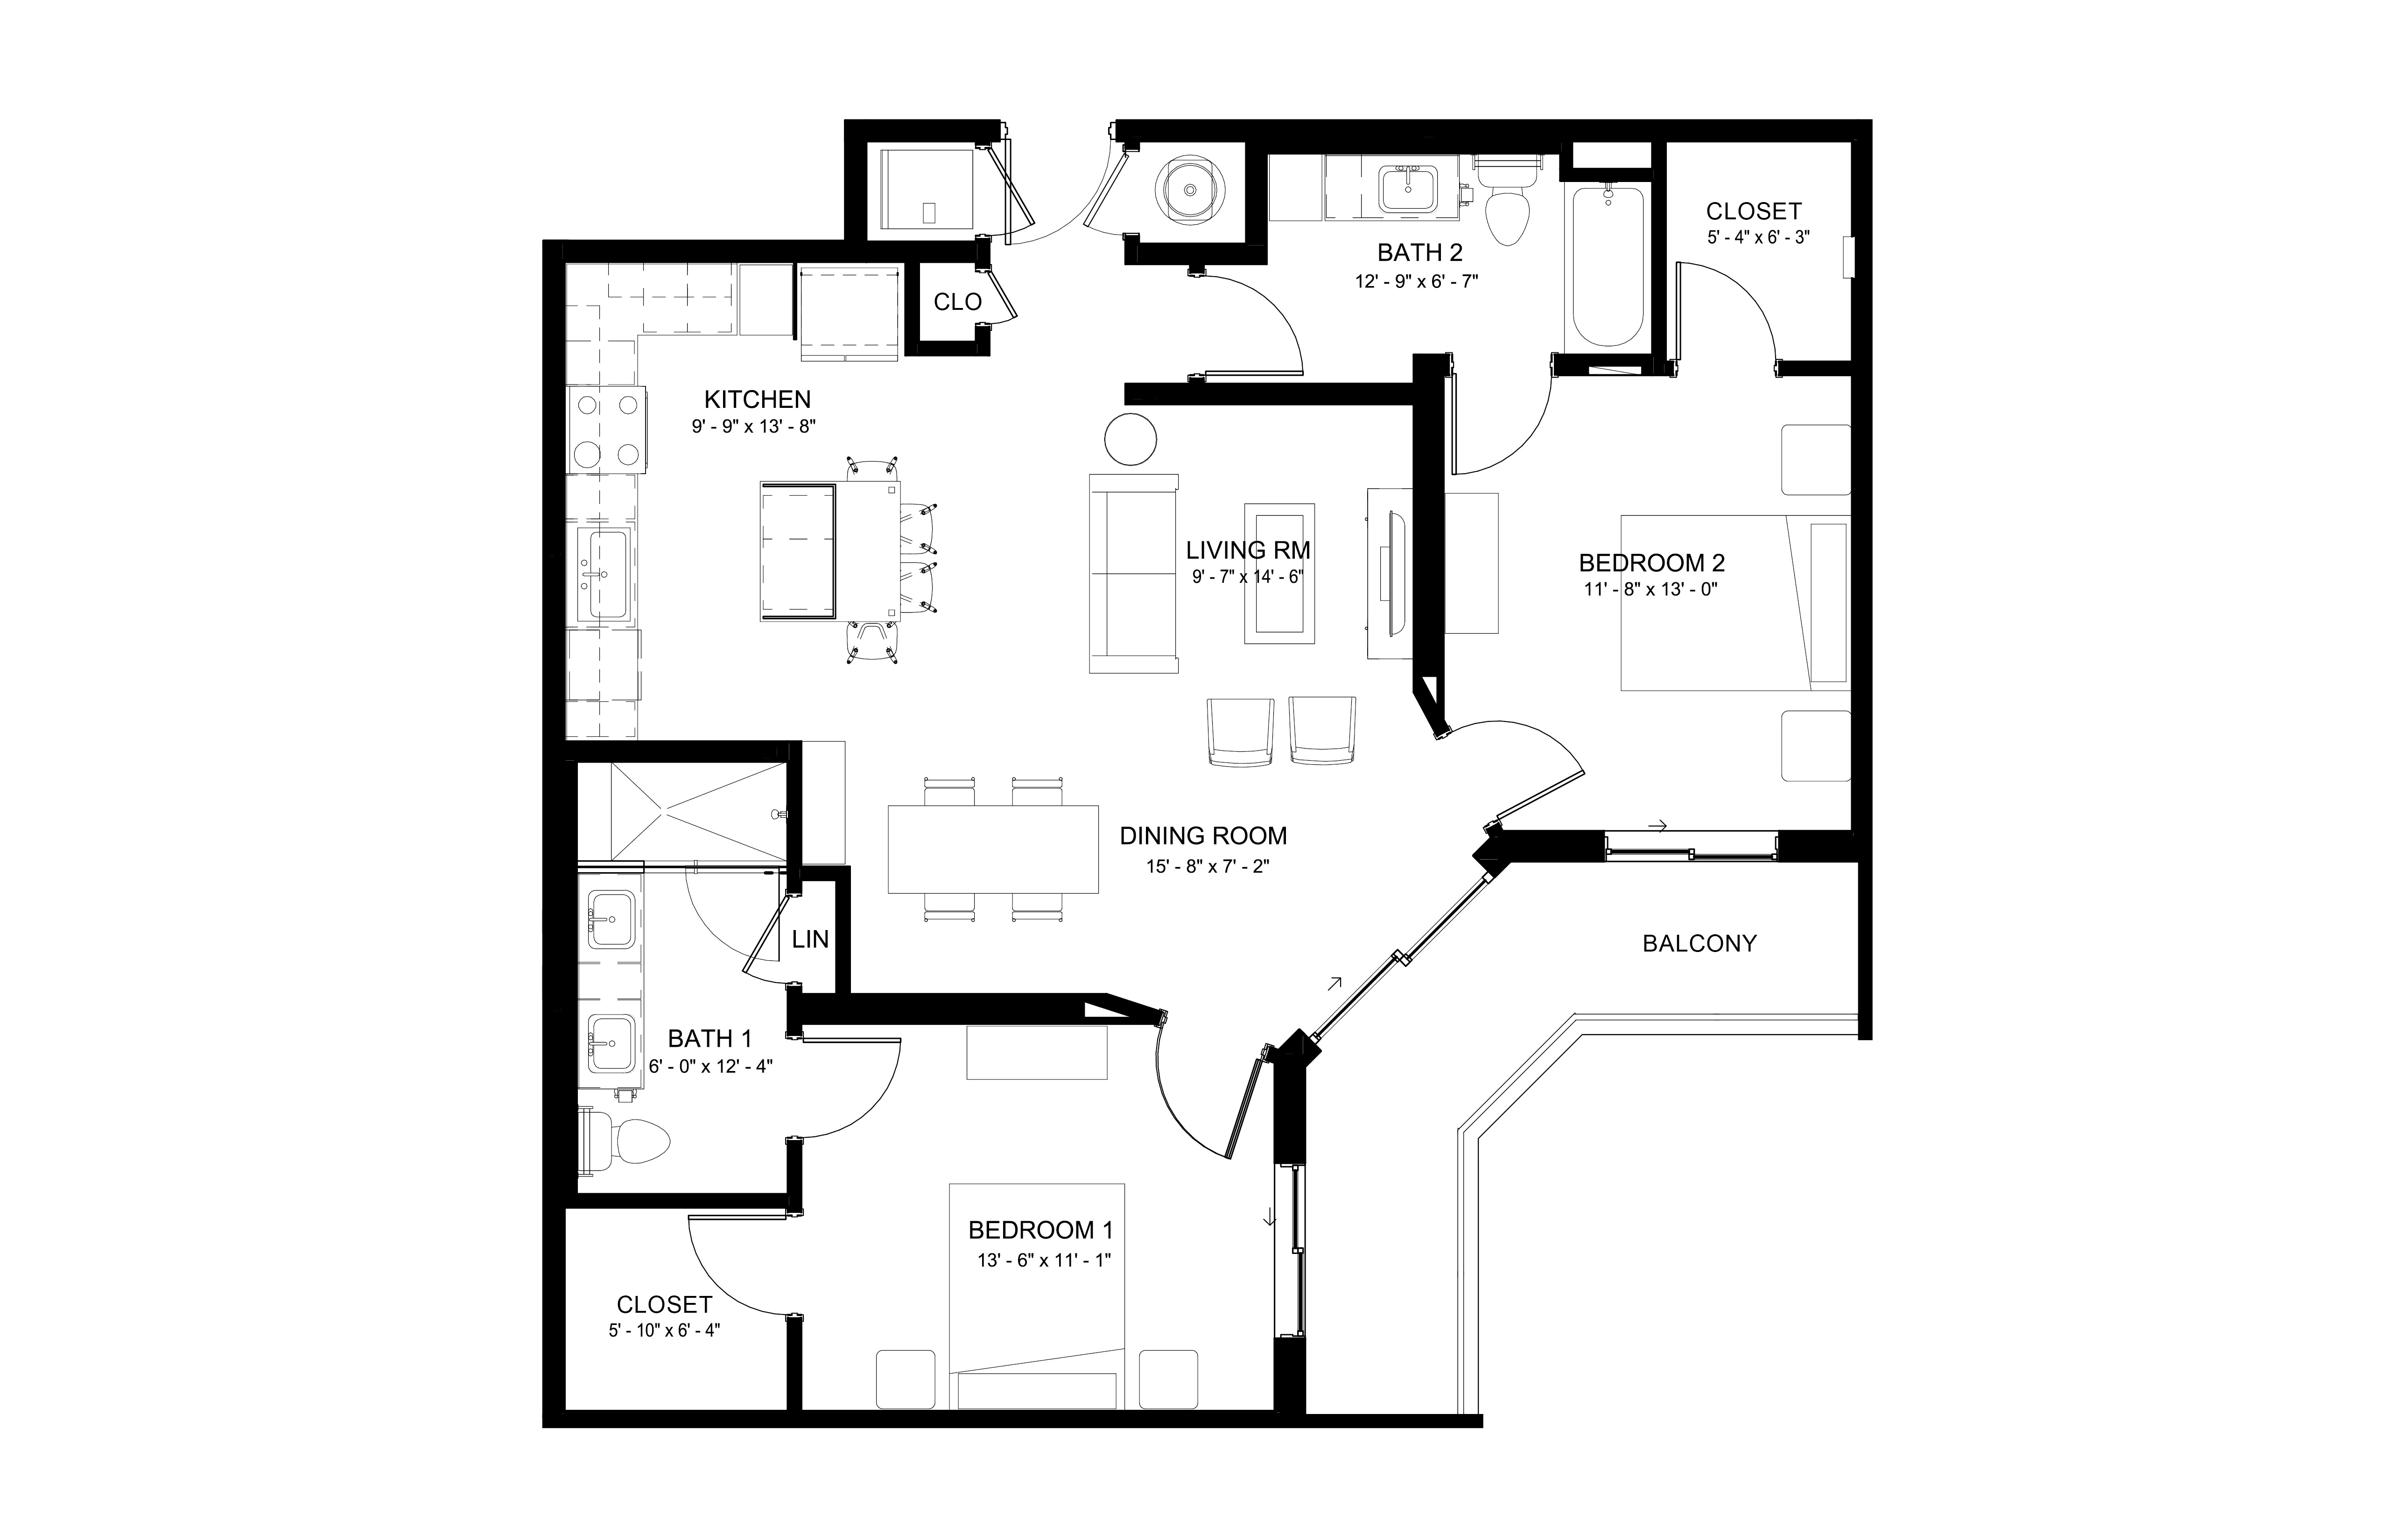 Apartment 710 floorplan